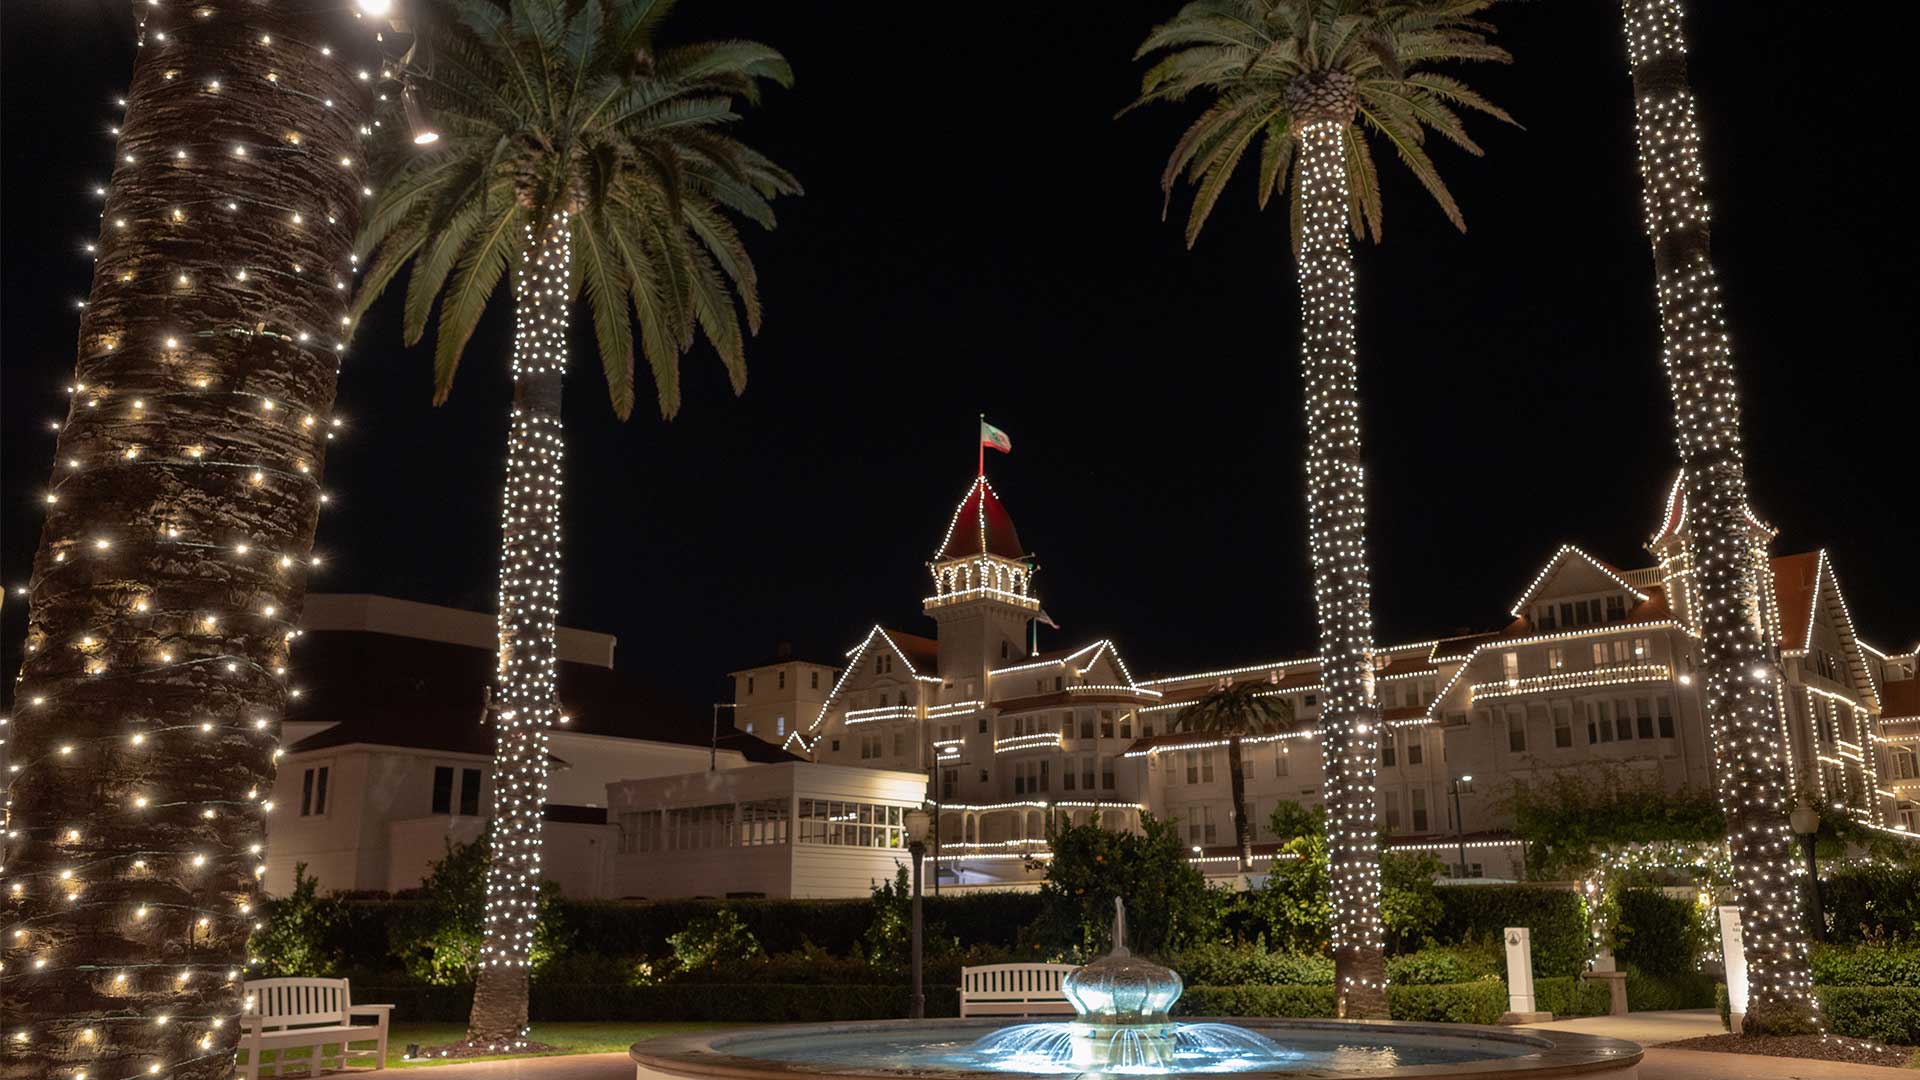 Hotel Del Coronado at Night